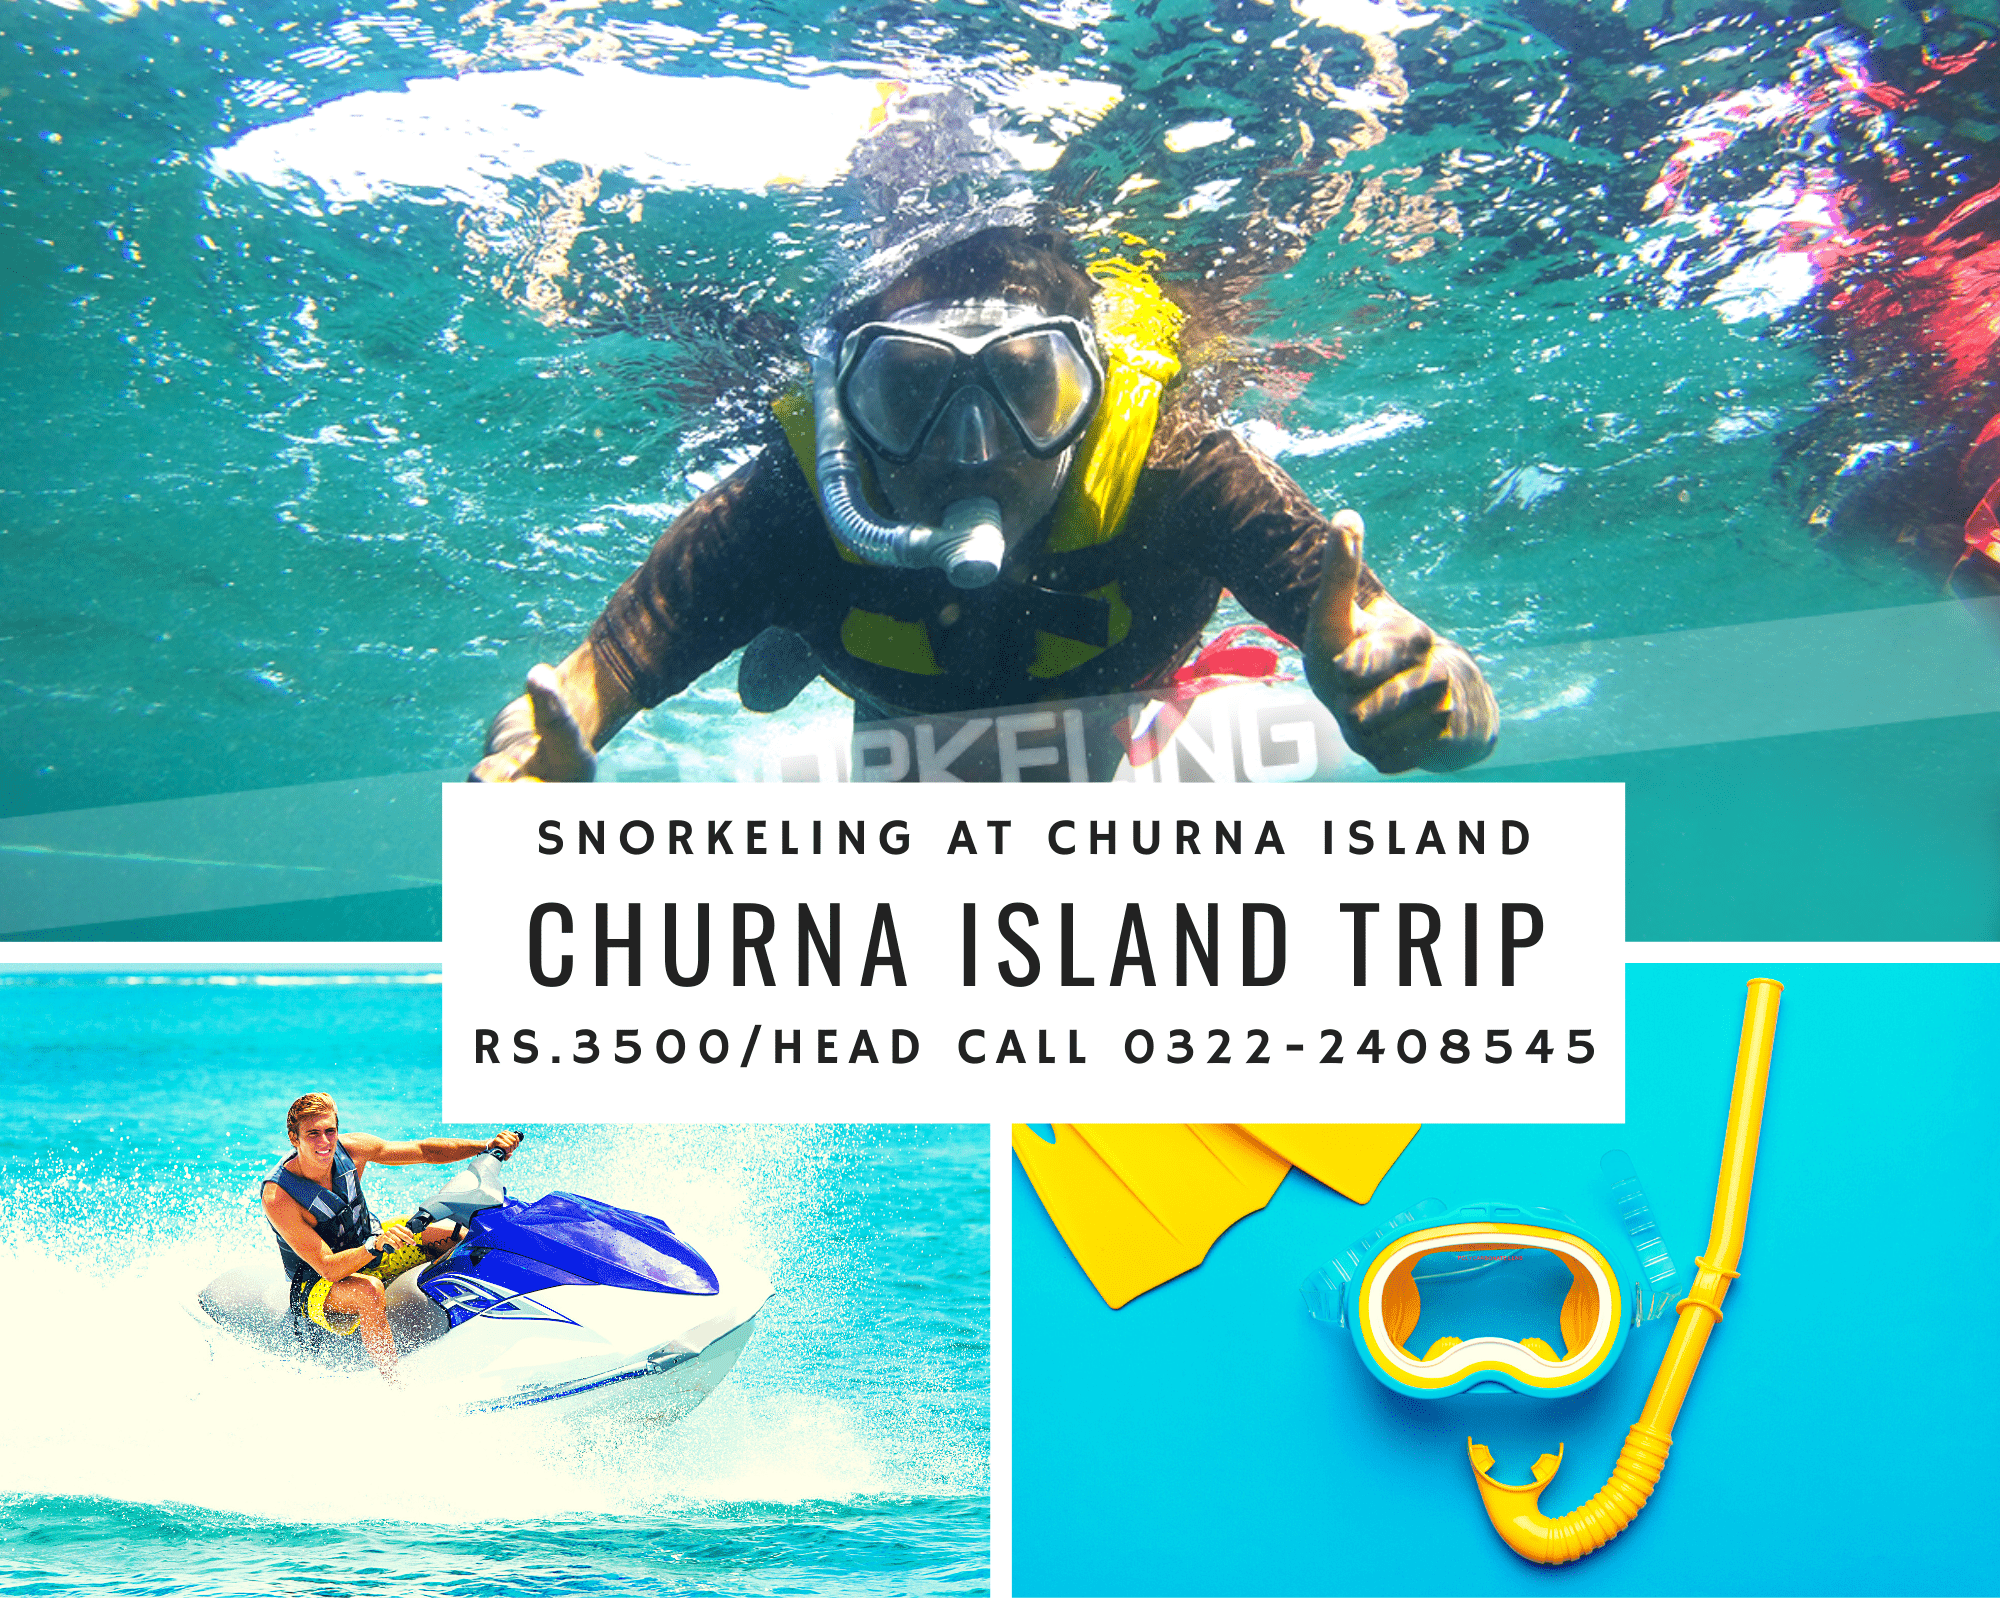 churna island trip packages